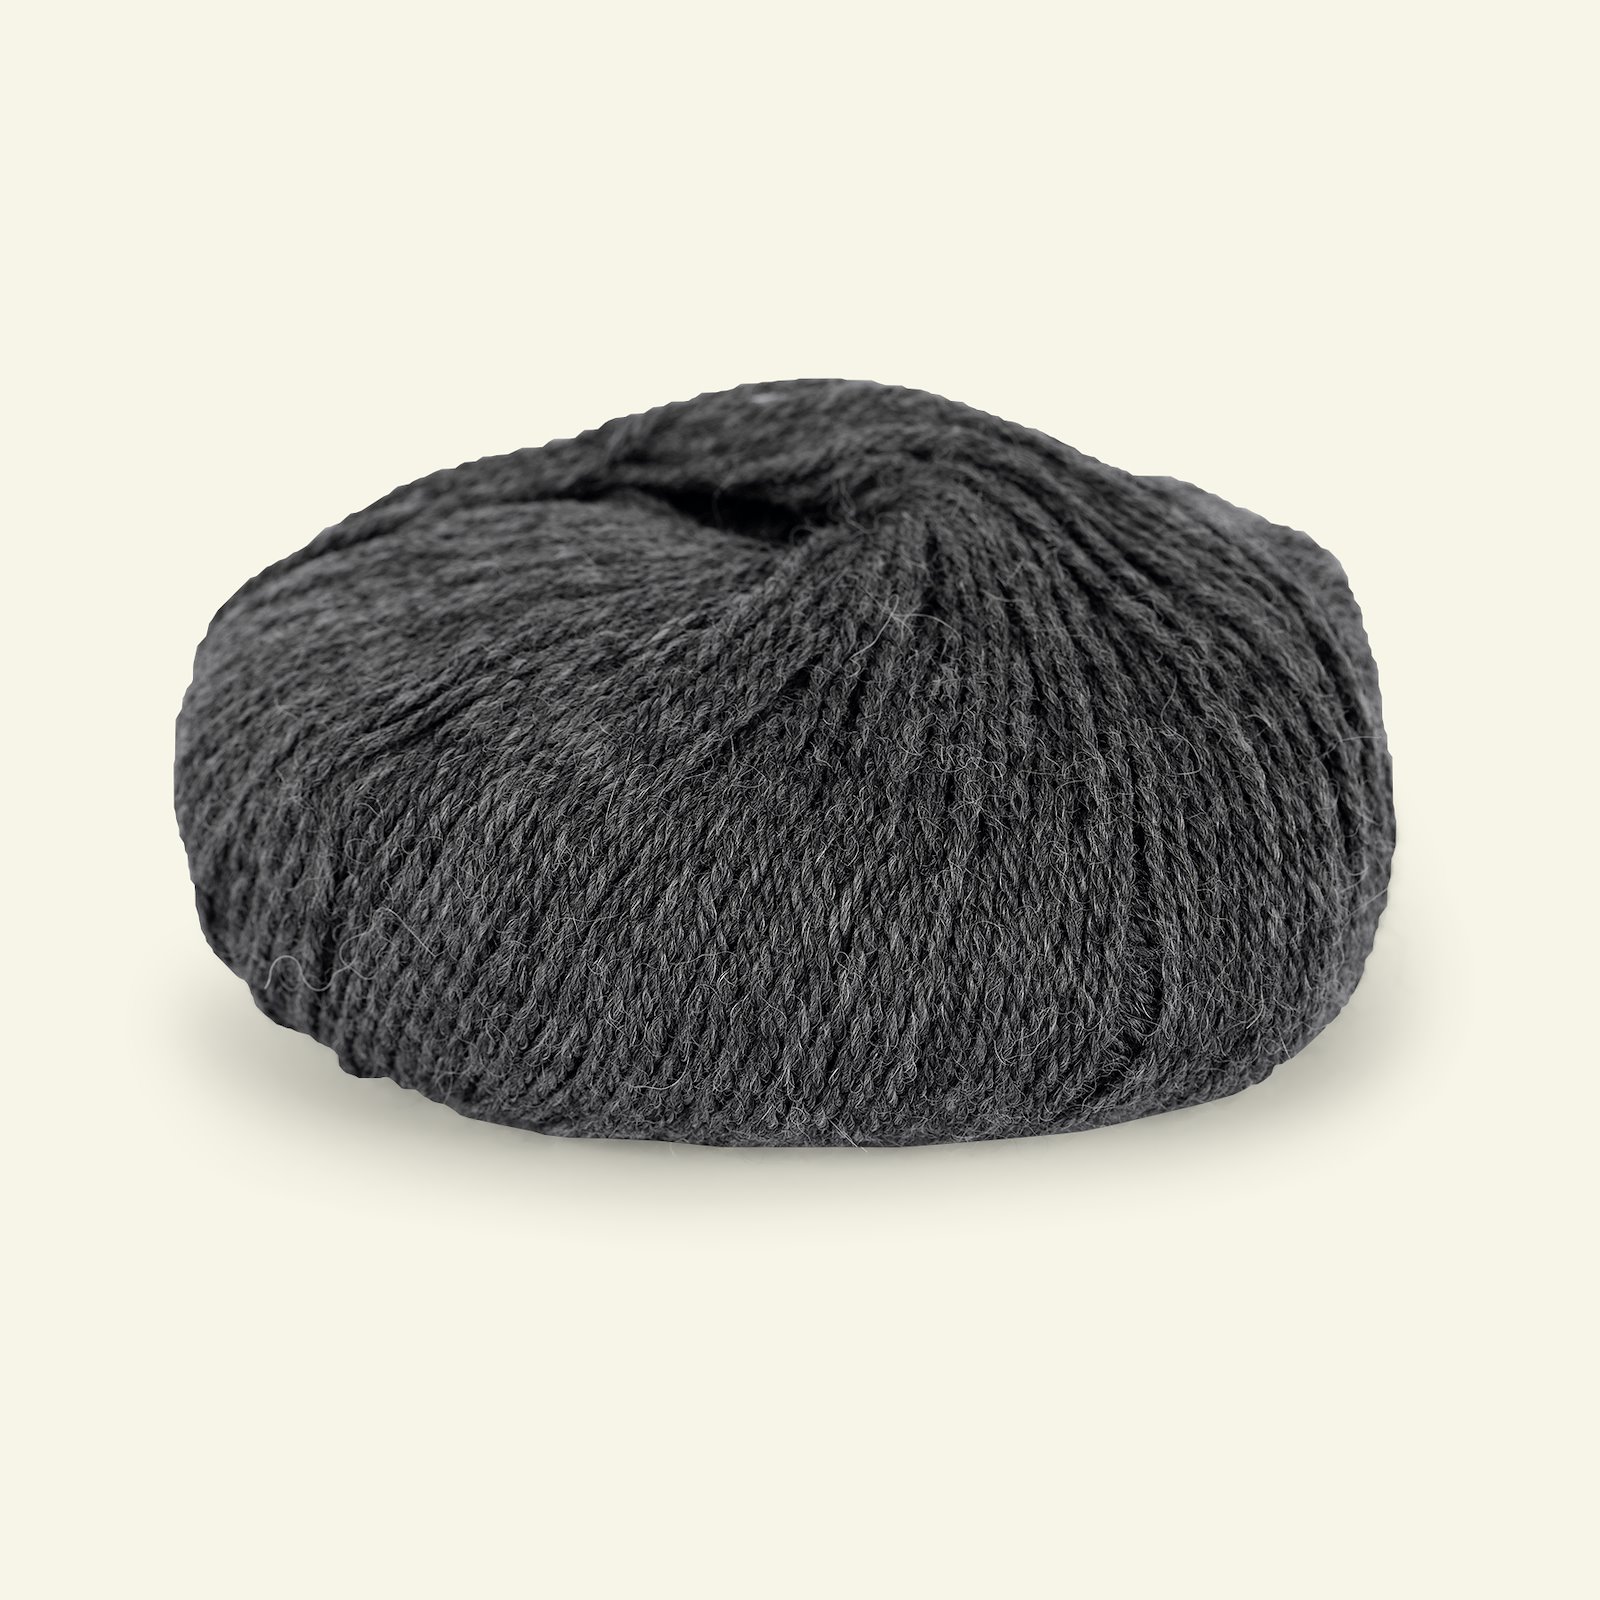 Du Store Alpakka, alpaca merino mixed yarn "Sterk", charcoal melange (807) 90000657_pack_b